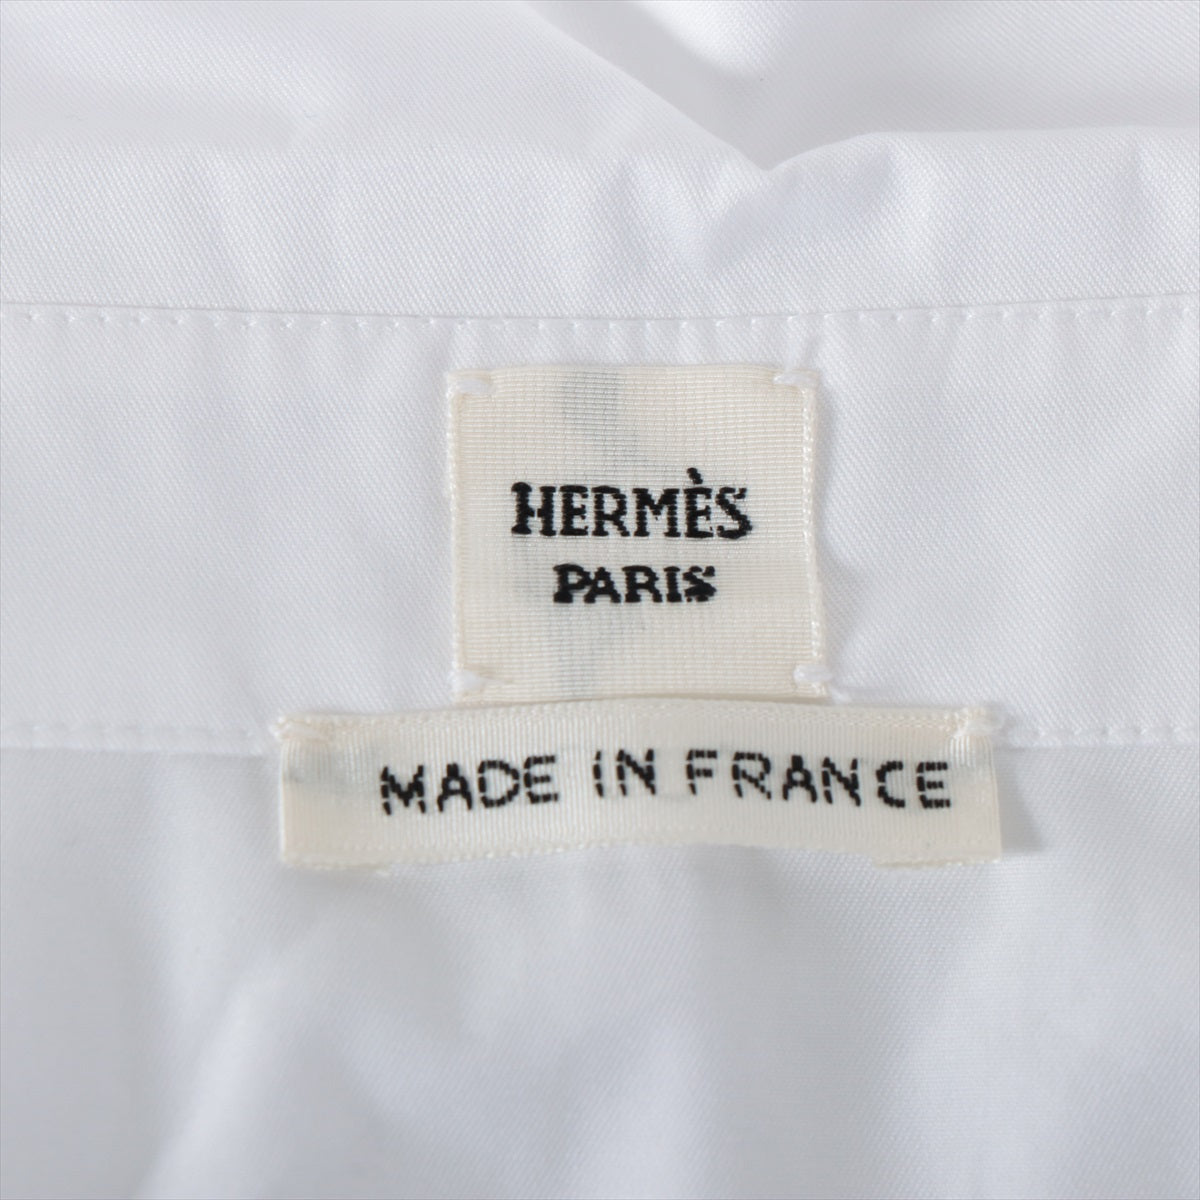 Hermès Cotton Shirt 38 Ladies' White